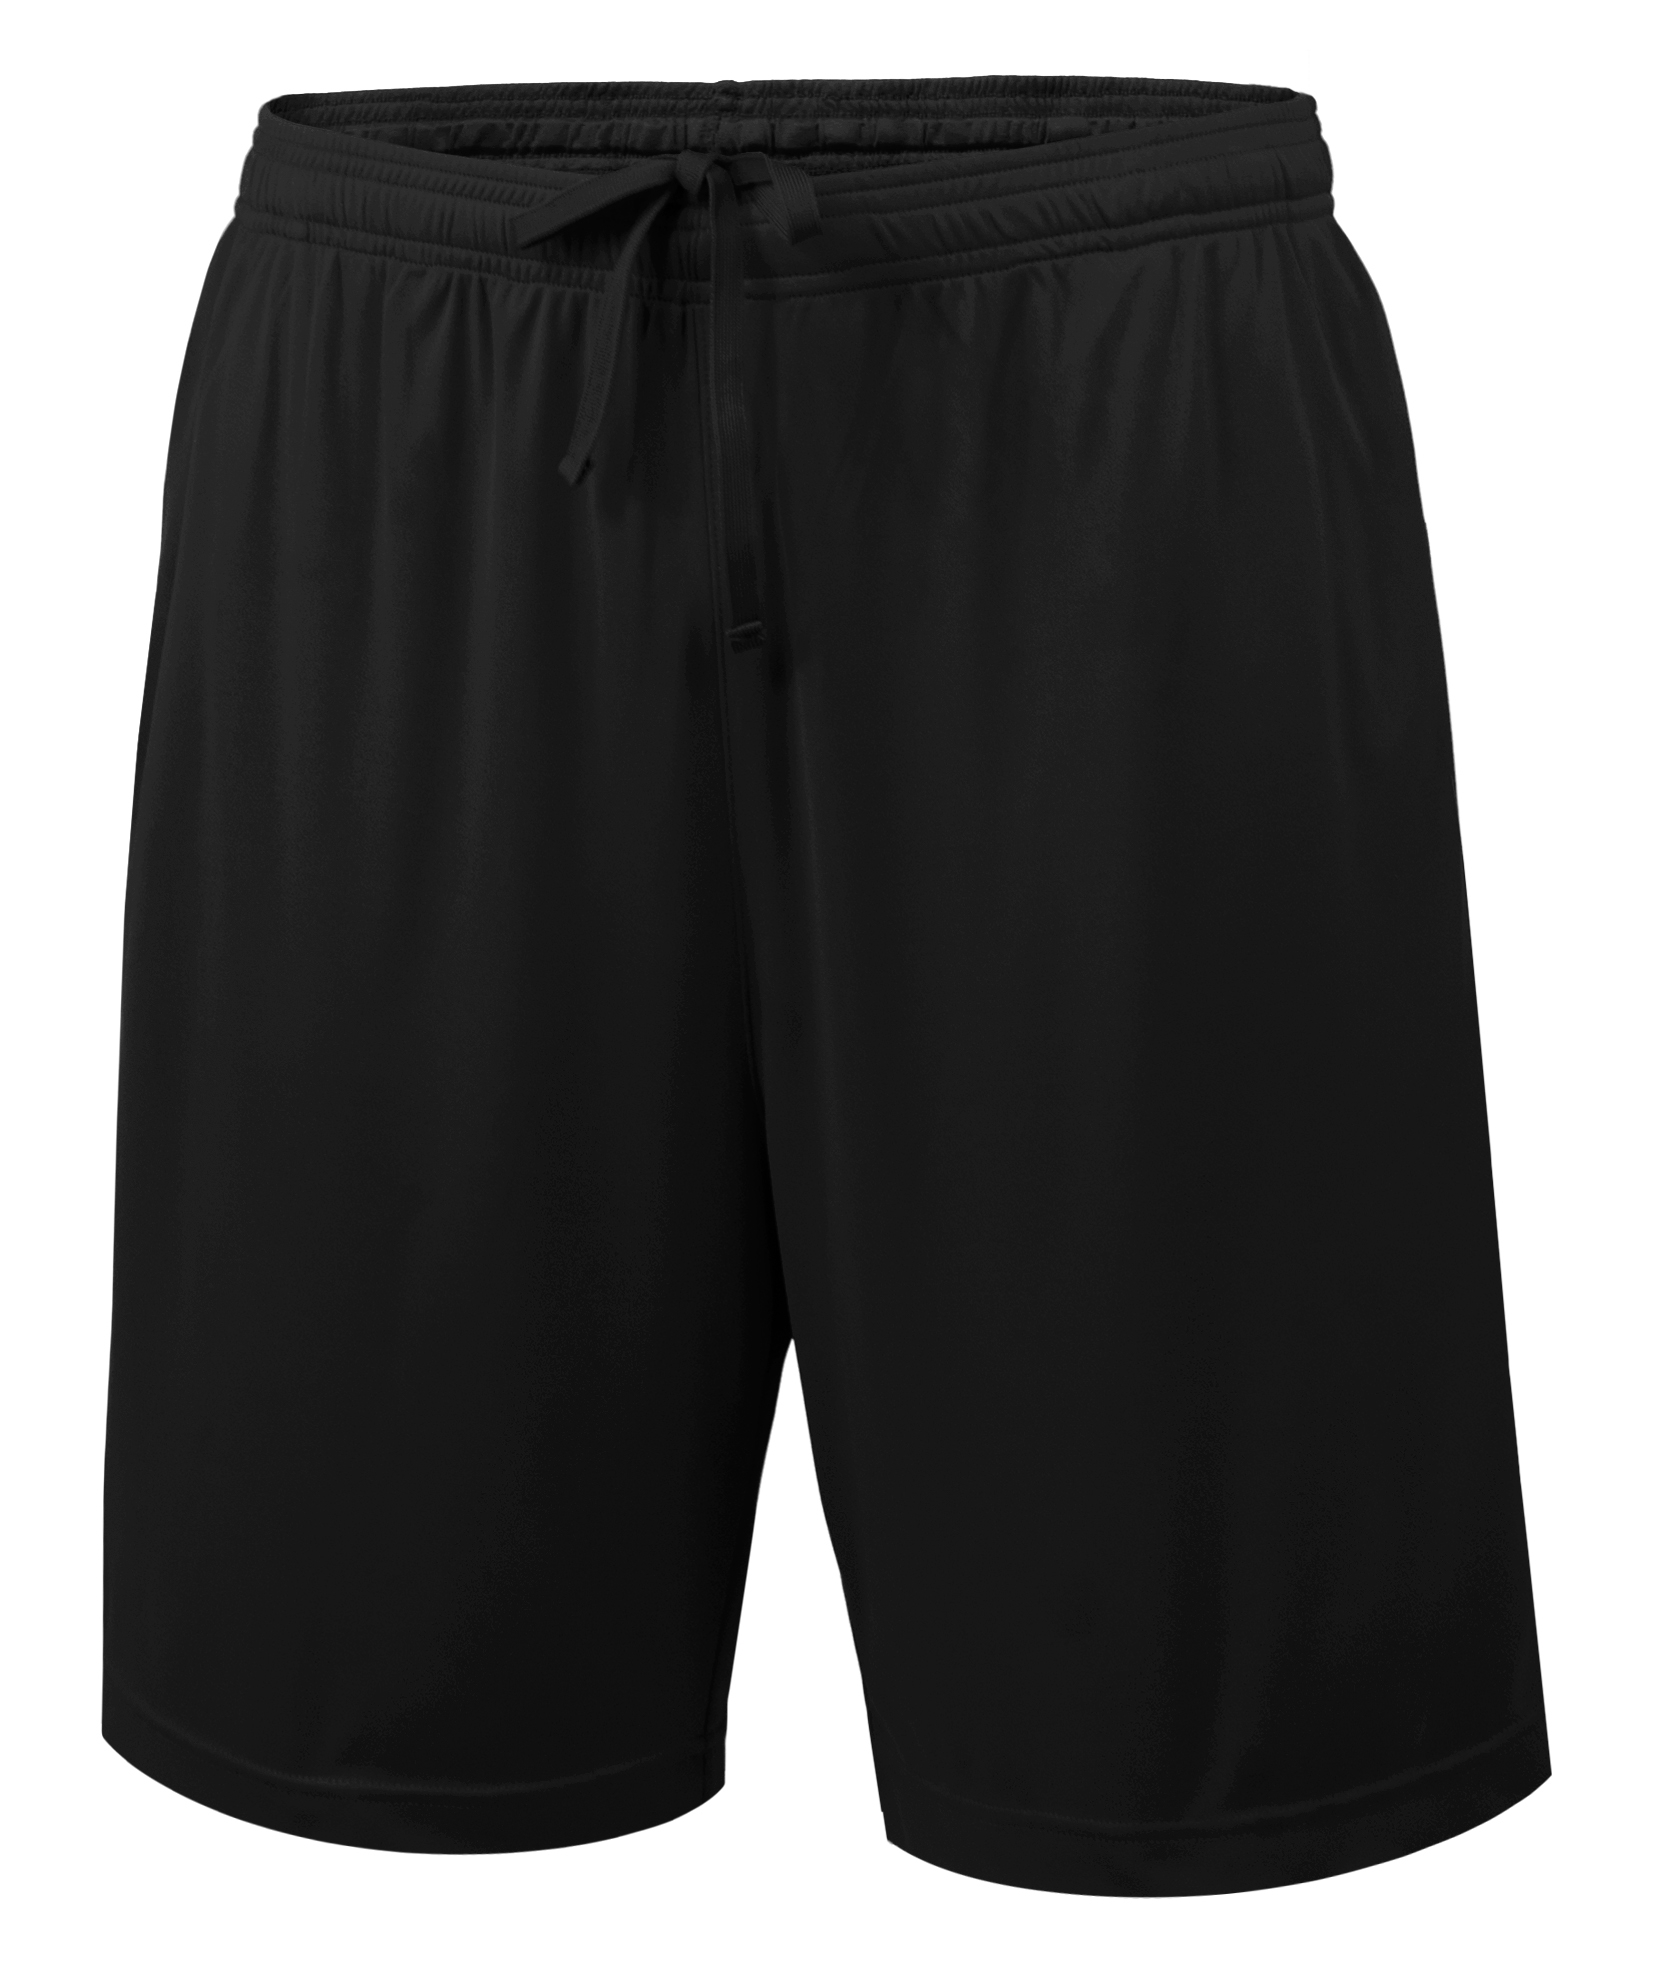 BAW Athletic Wear S717 - Men's Xtreme-Tek 7" 2-Pocket Short